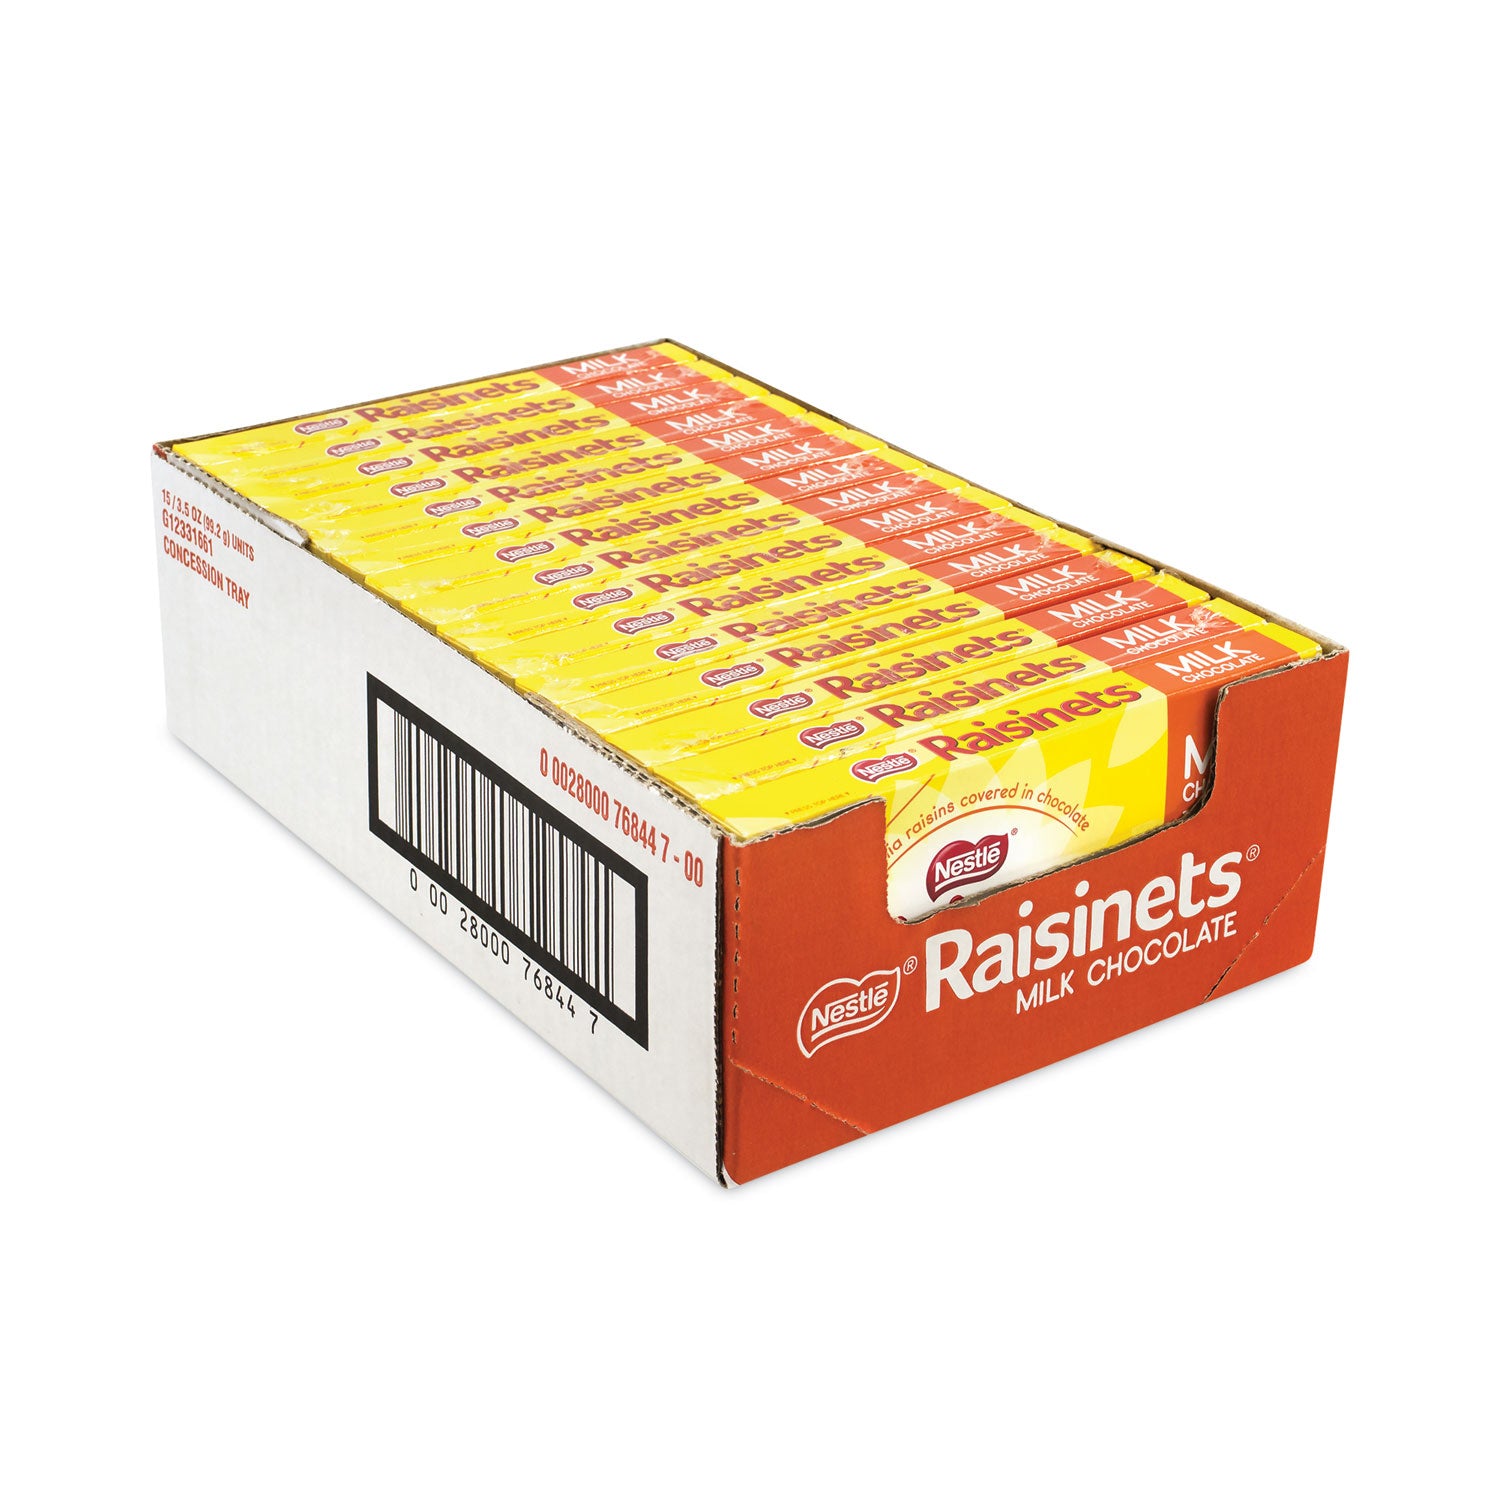 raisinets-milk-chocolate-candy-raisins-35-oz-box-15-boxes-carton-ships-in-1-3-business-days_grr20902540 - 3